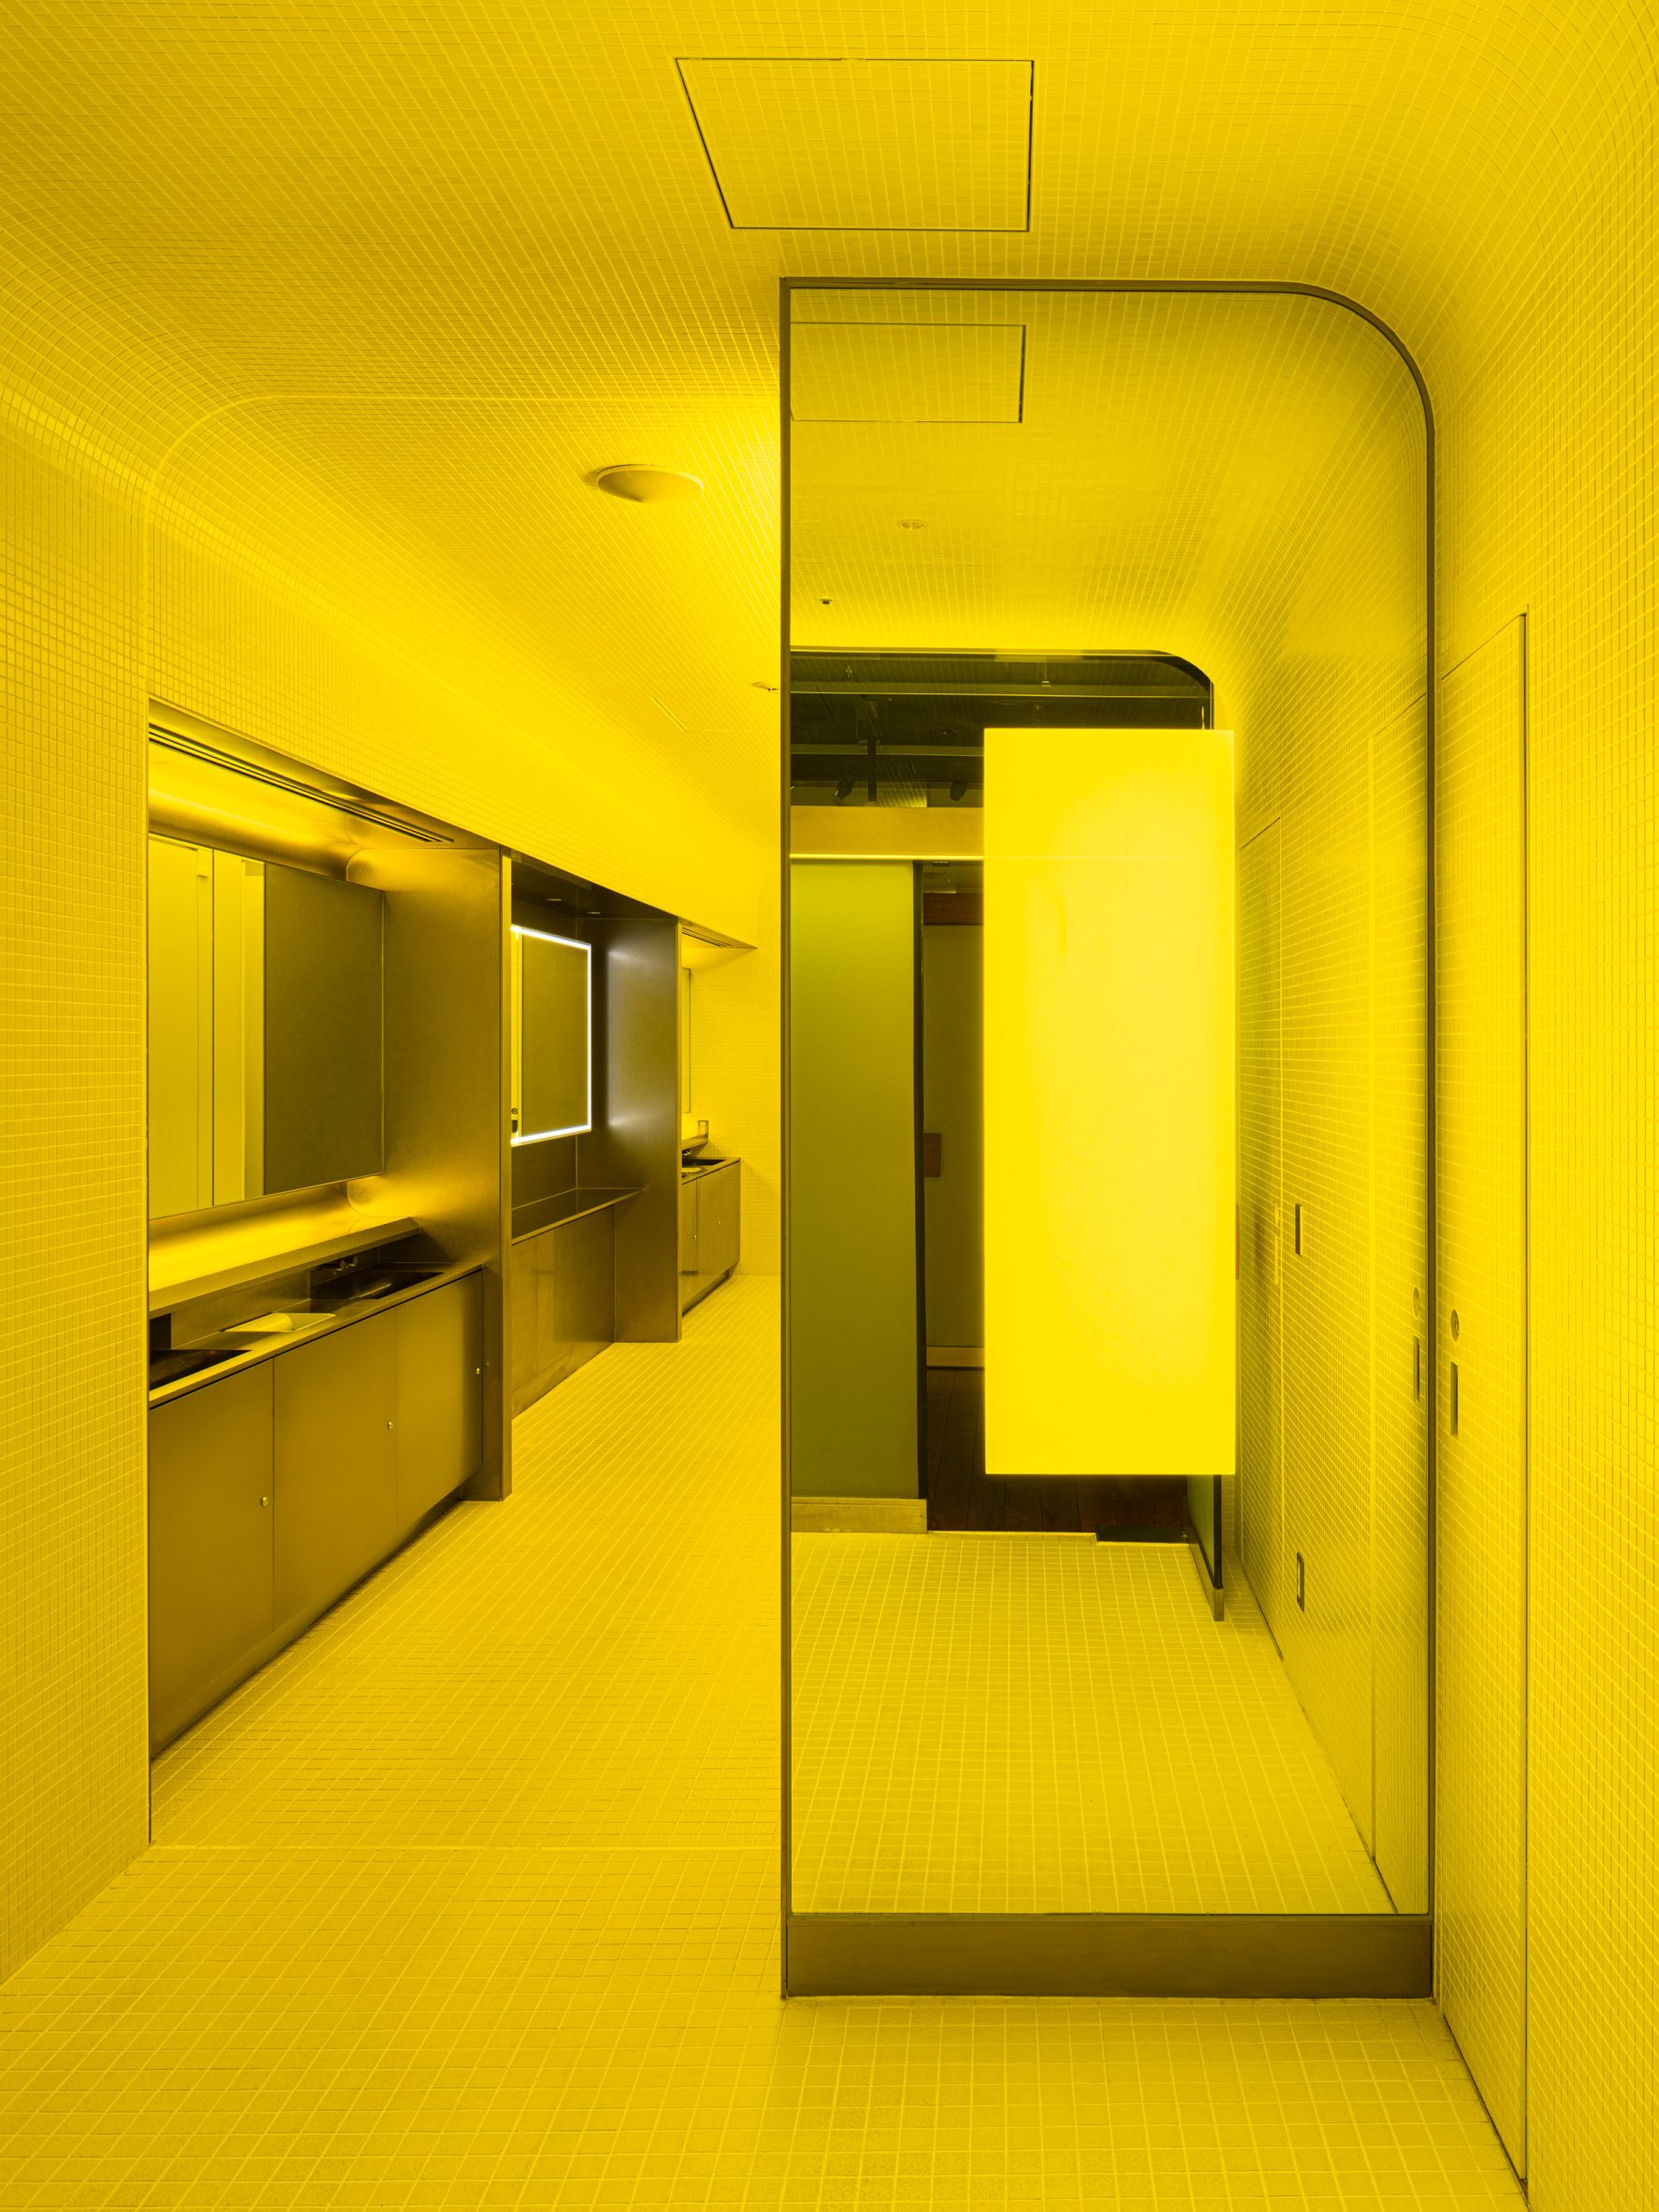 Interior of yellow bathroom